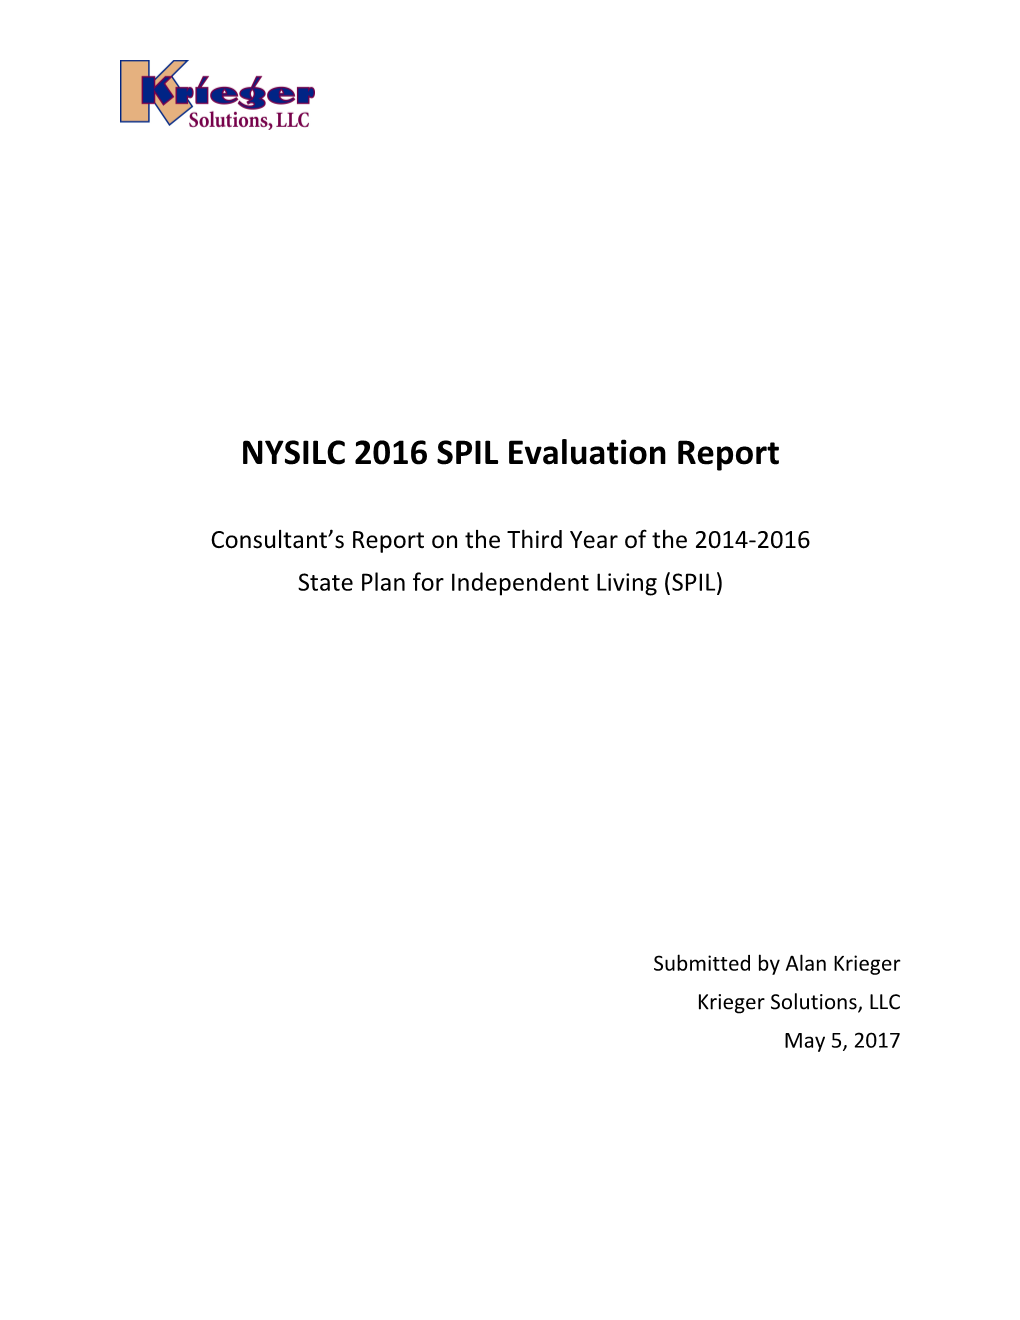 NYSILC SPIL Evaluation Report, FY 2015-2016